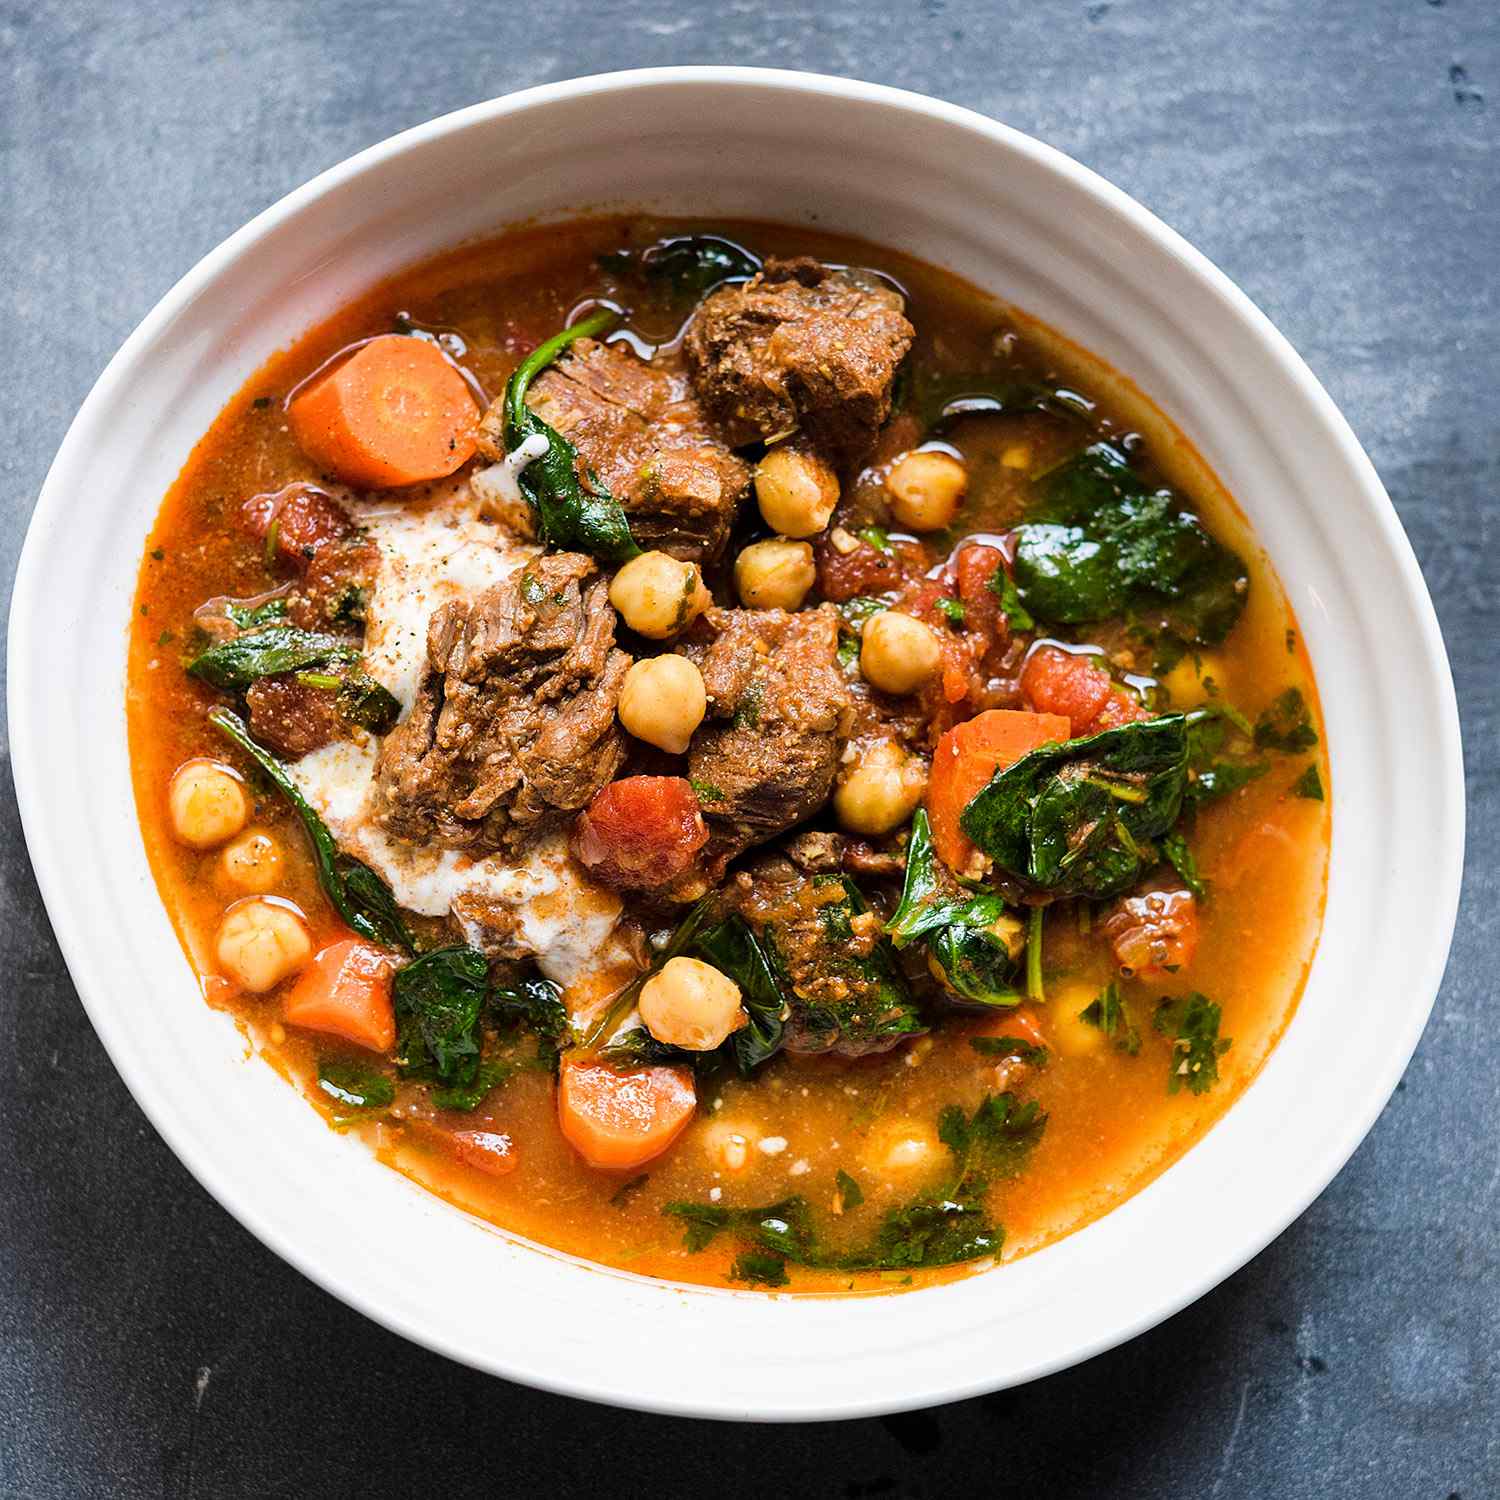 soup vs stew, soup recipes, stew recipes